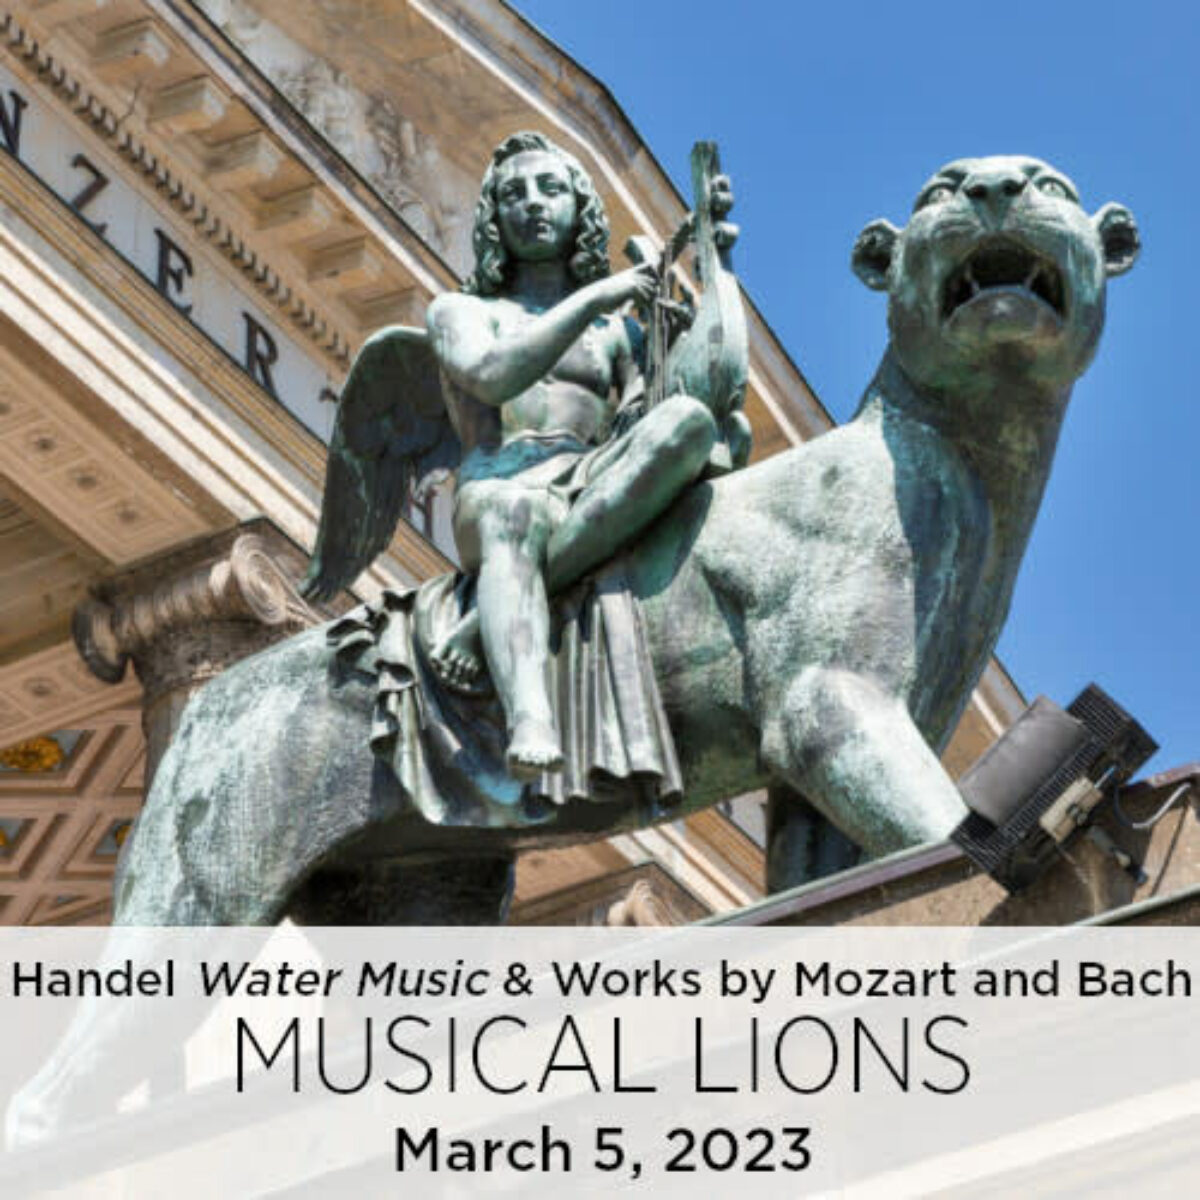 Musical Lions: Bach, Handel & Mozart